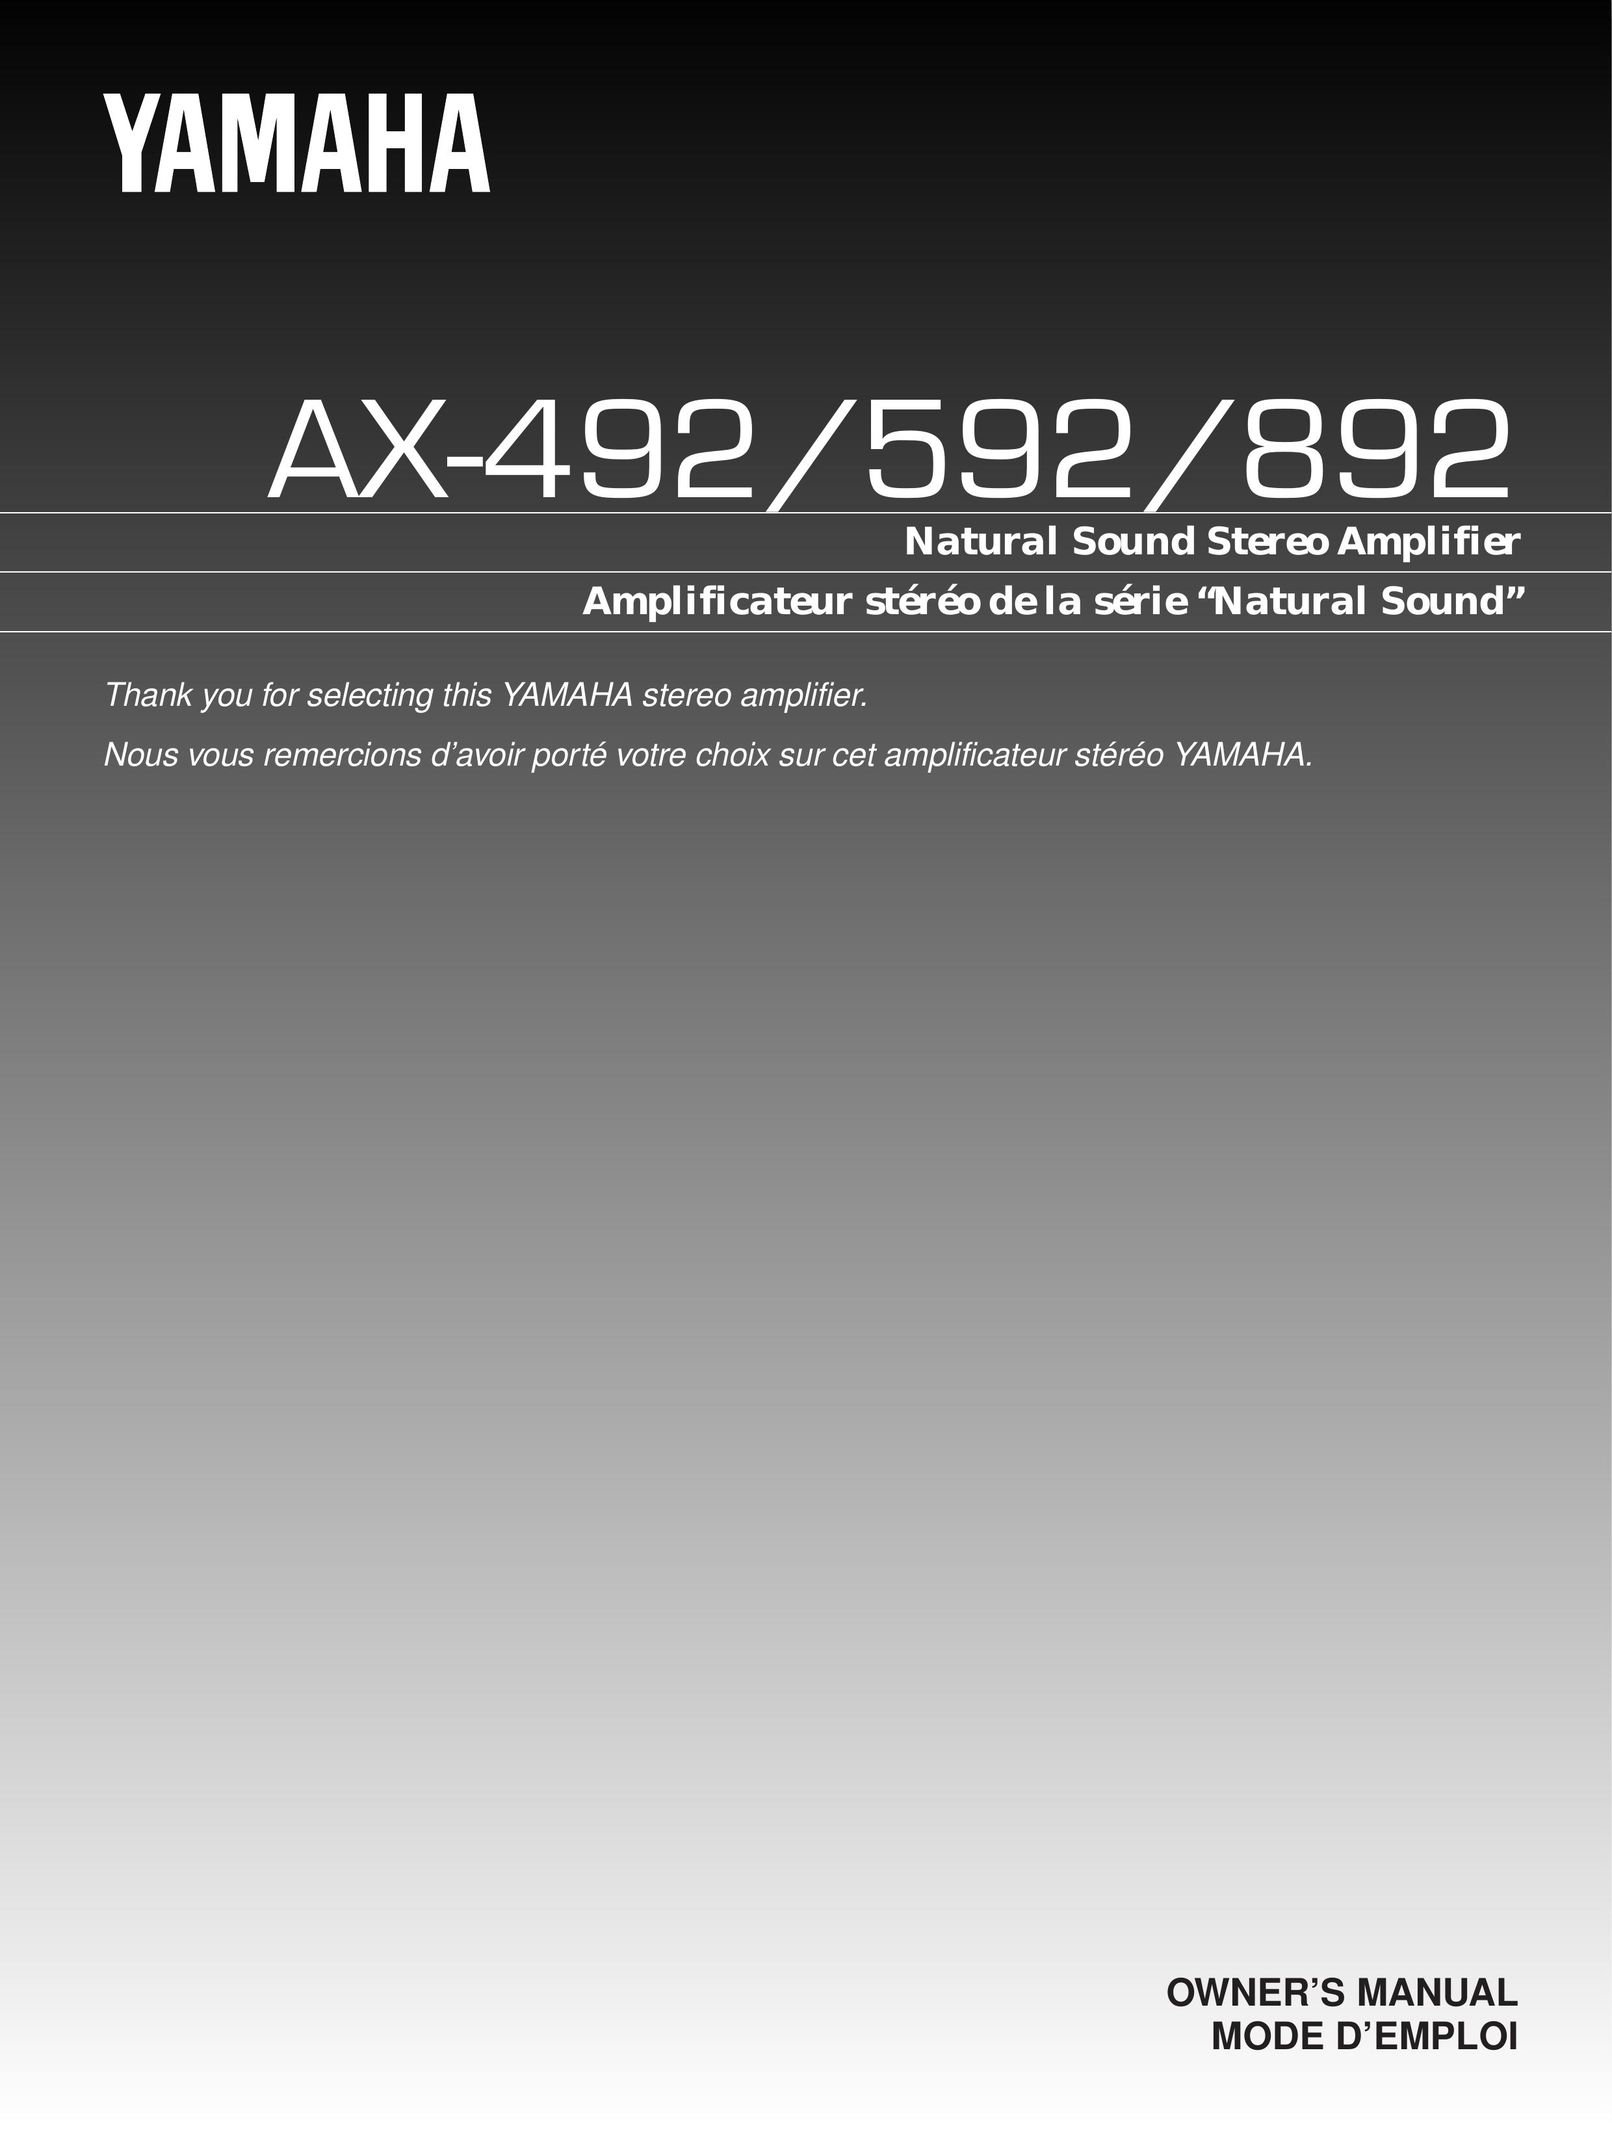 Yamaha AX-492, AX-592, AX-892 Stereo Amplifier User Manual